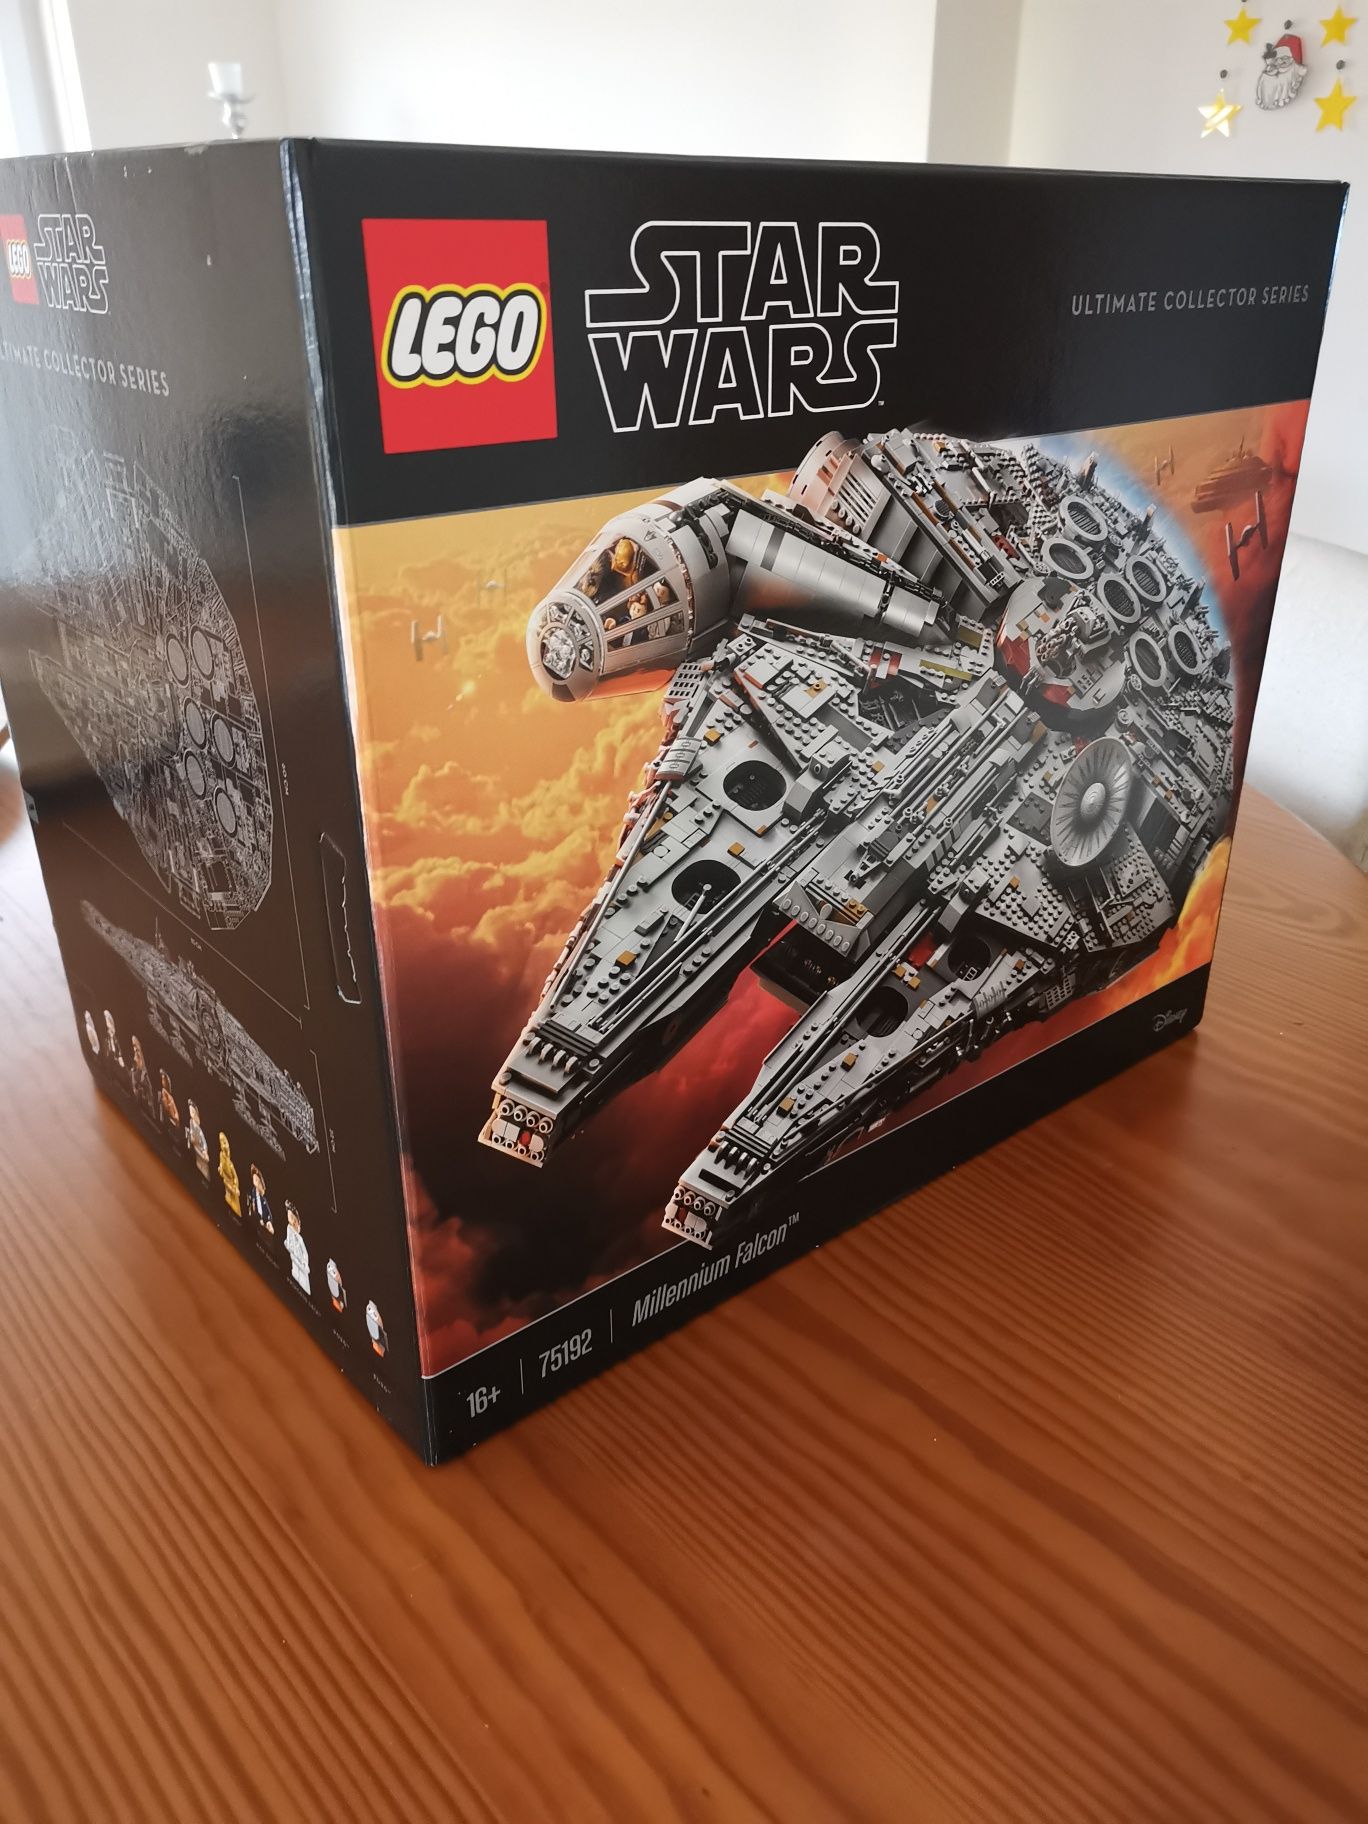 Star wars Lego millennium falcon collectors edition.